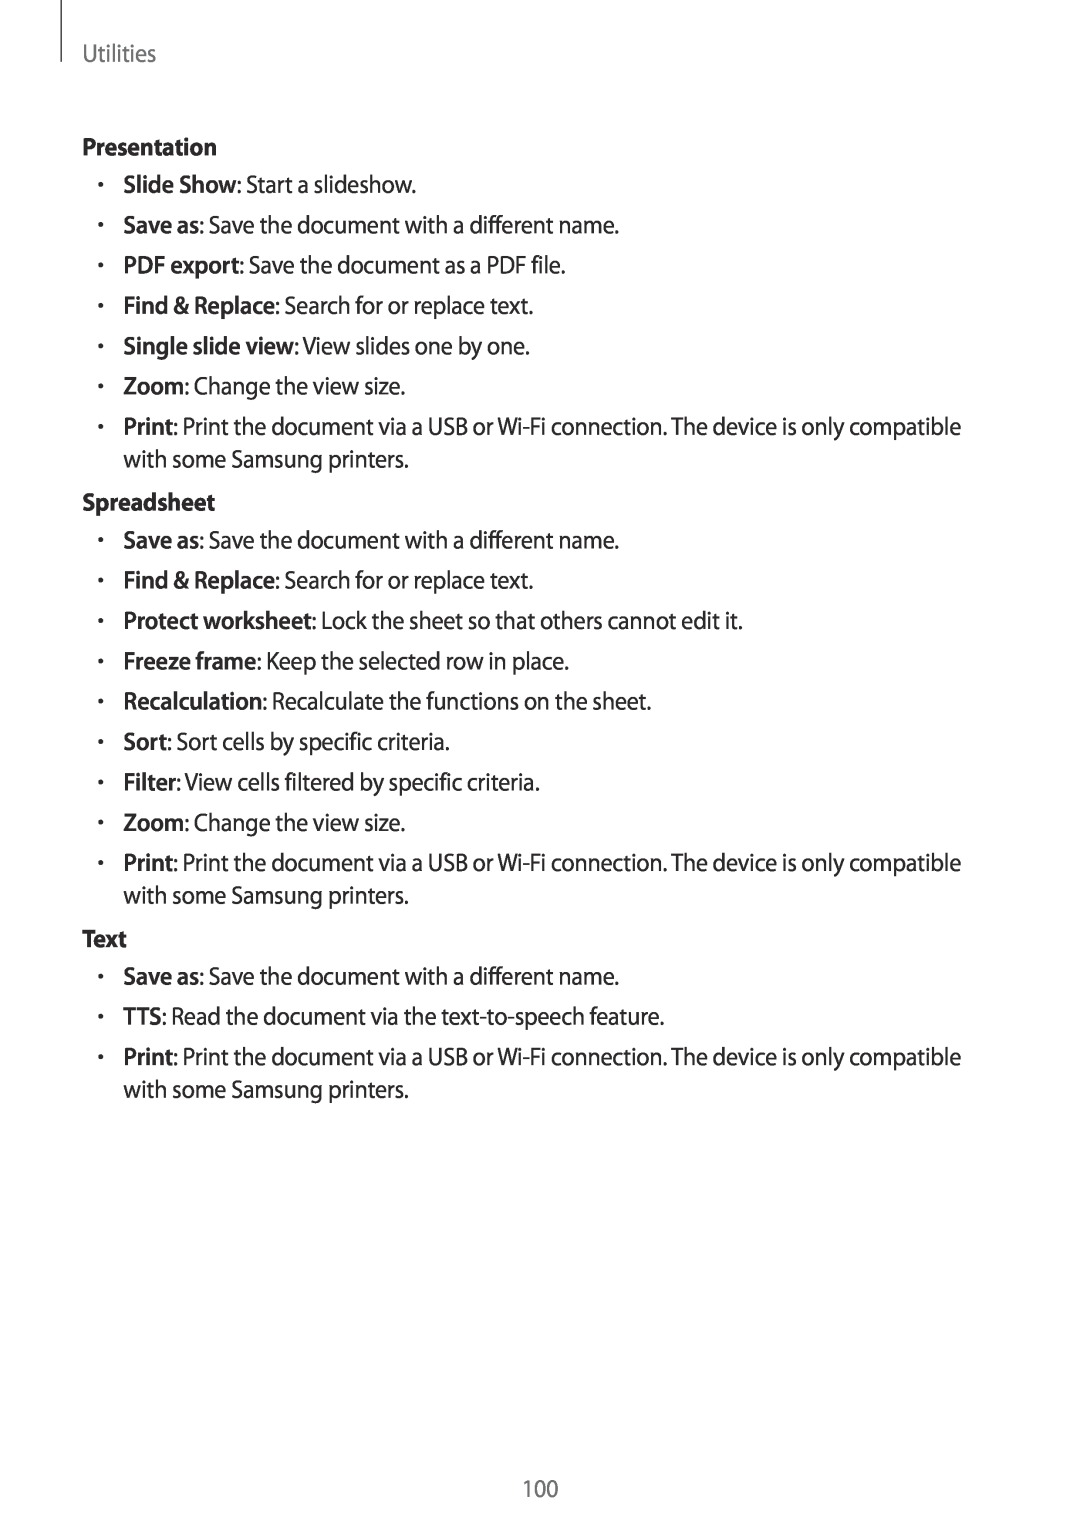 Samsung GT-N5100 user manual Presentation, Spreadsheet, Text, Utilities 